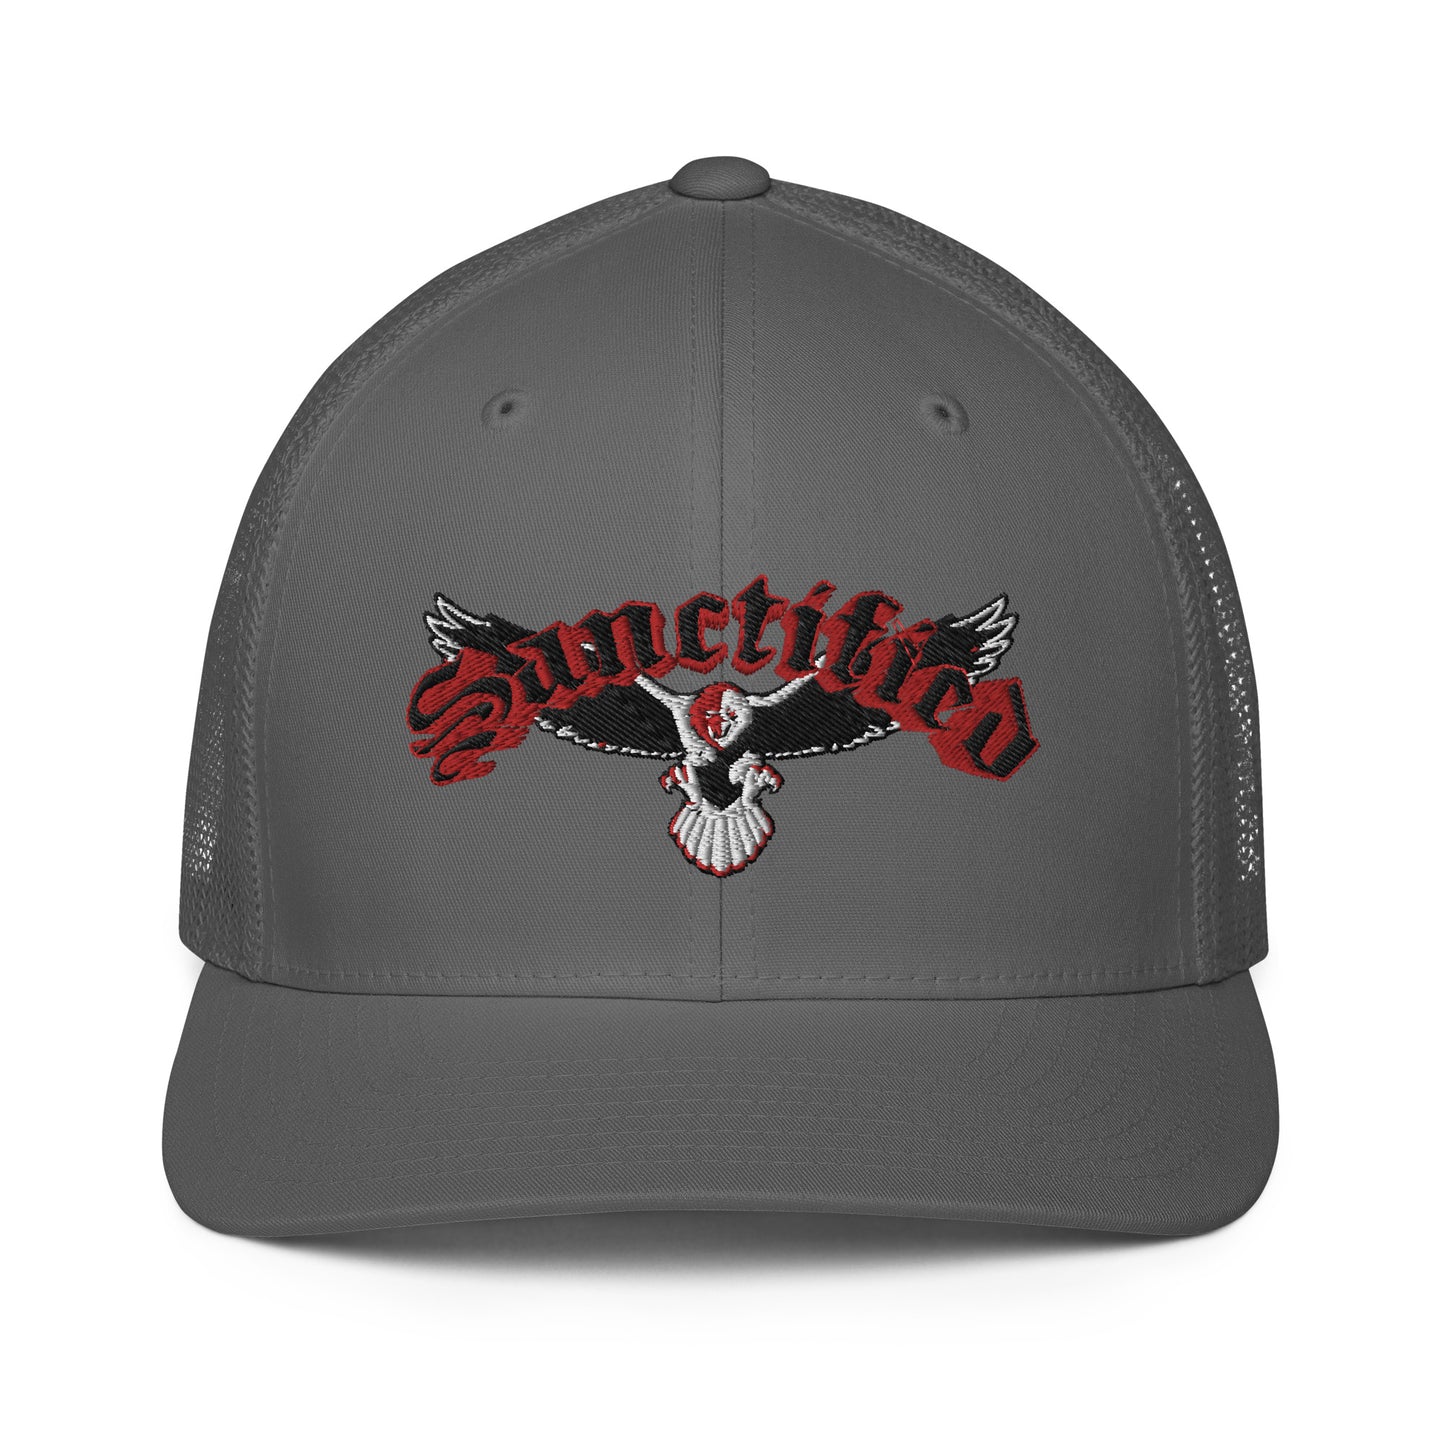 Sanctified Eagle- Closed-back trucker cap